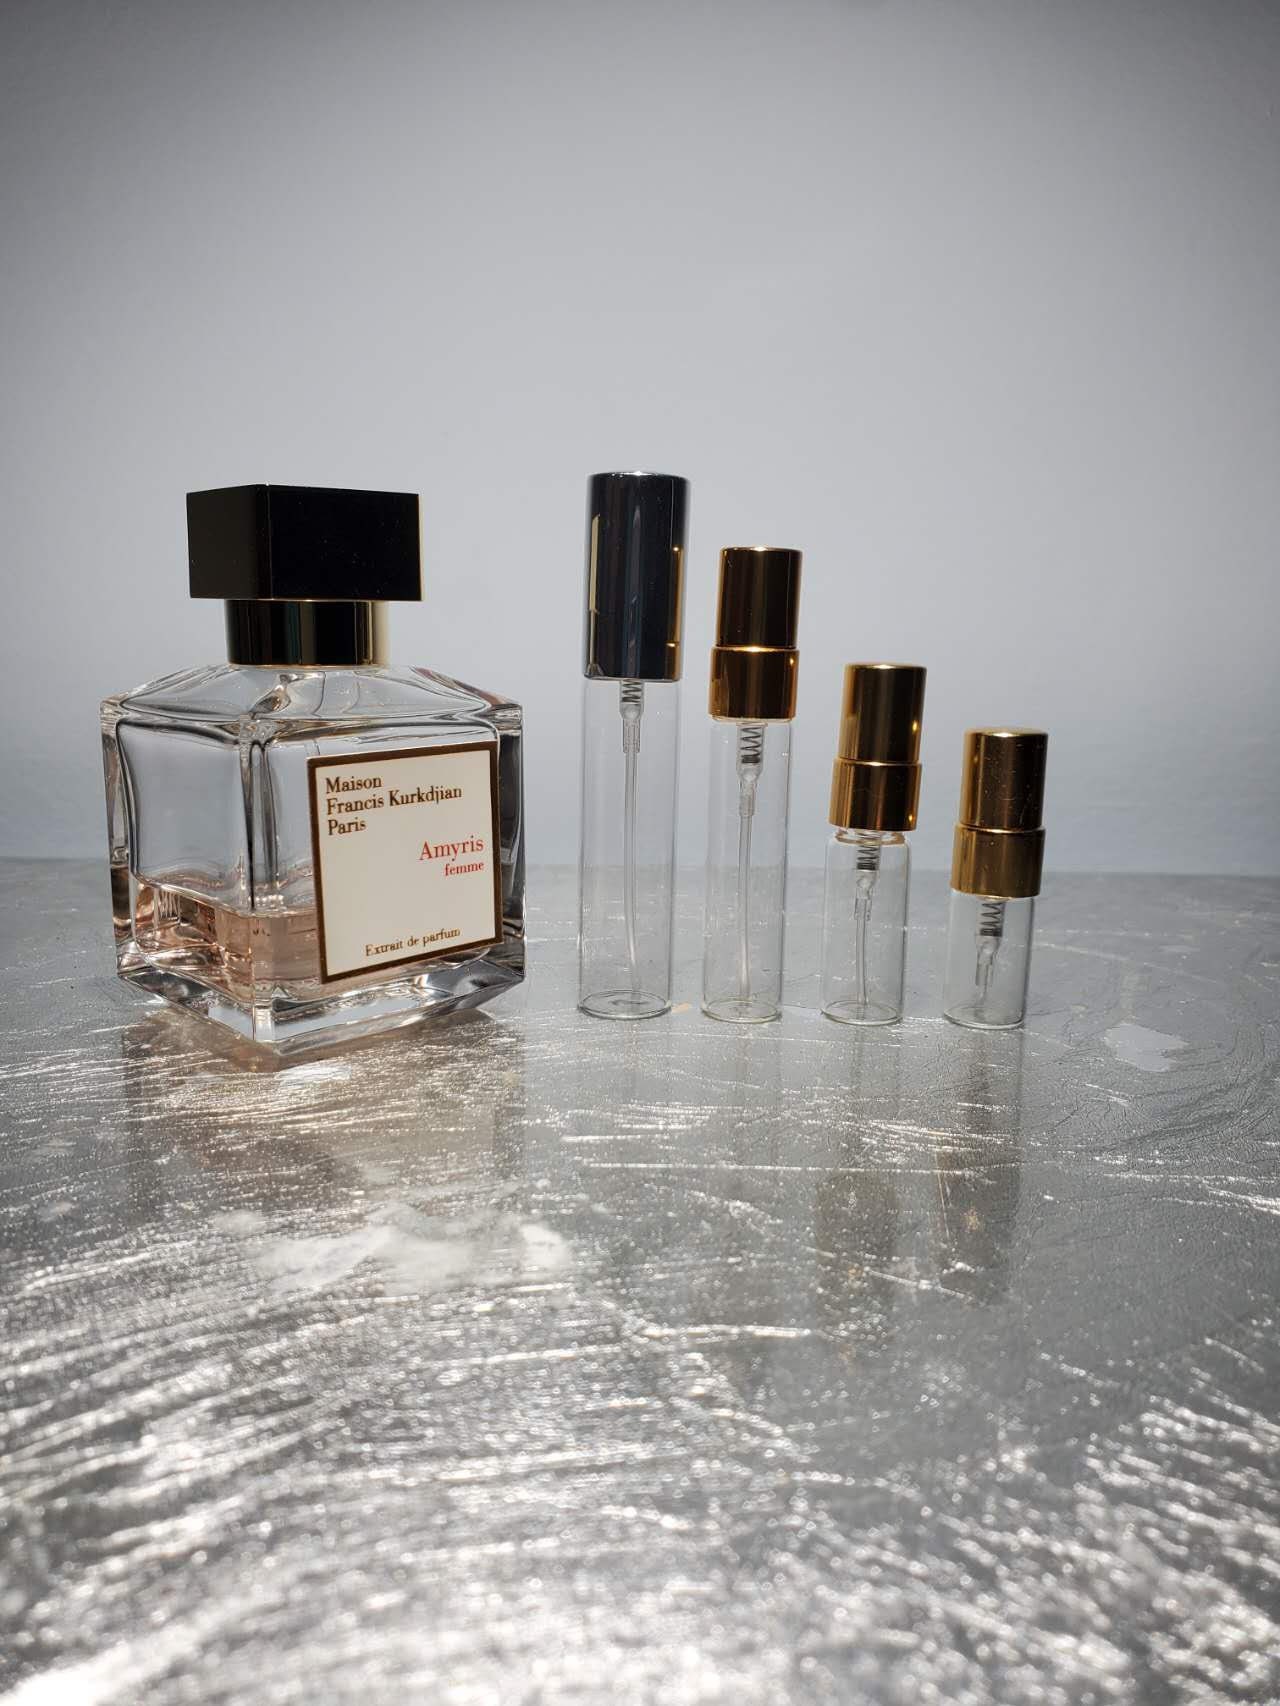 Inspired by MFK's Amyris Femme - Woman Perfume - Floral Sandalwood